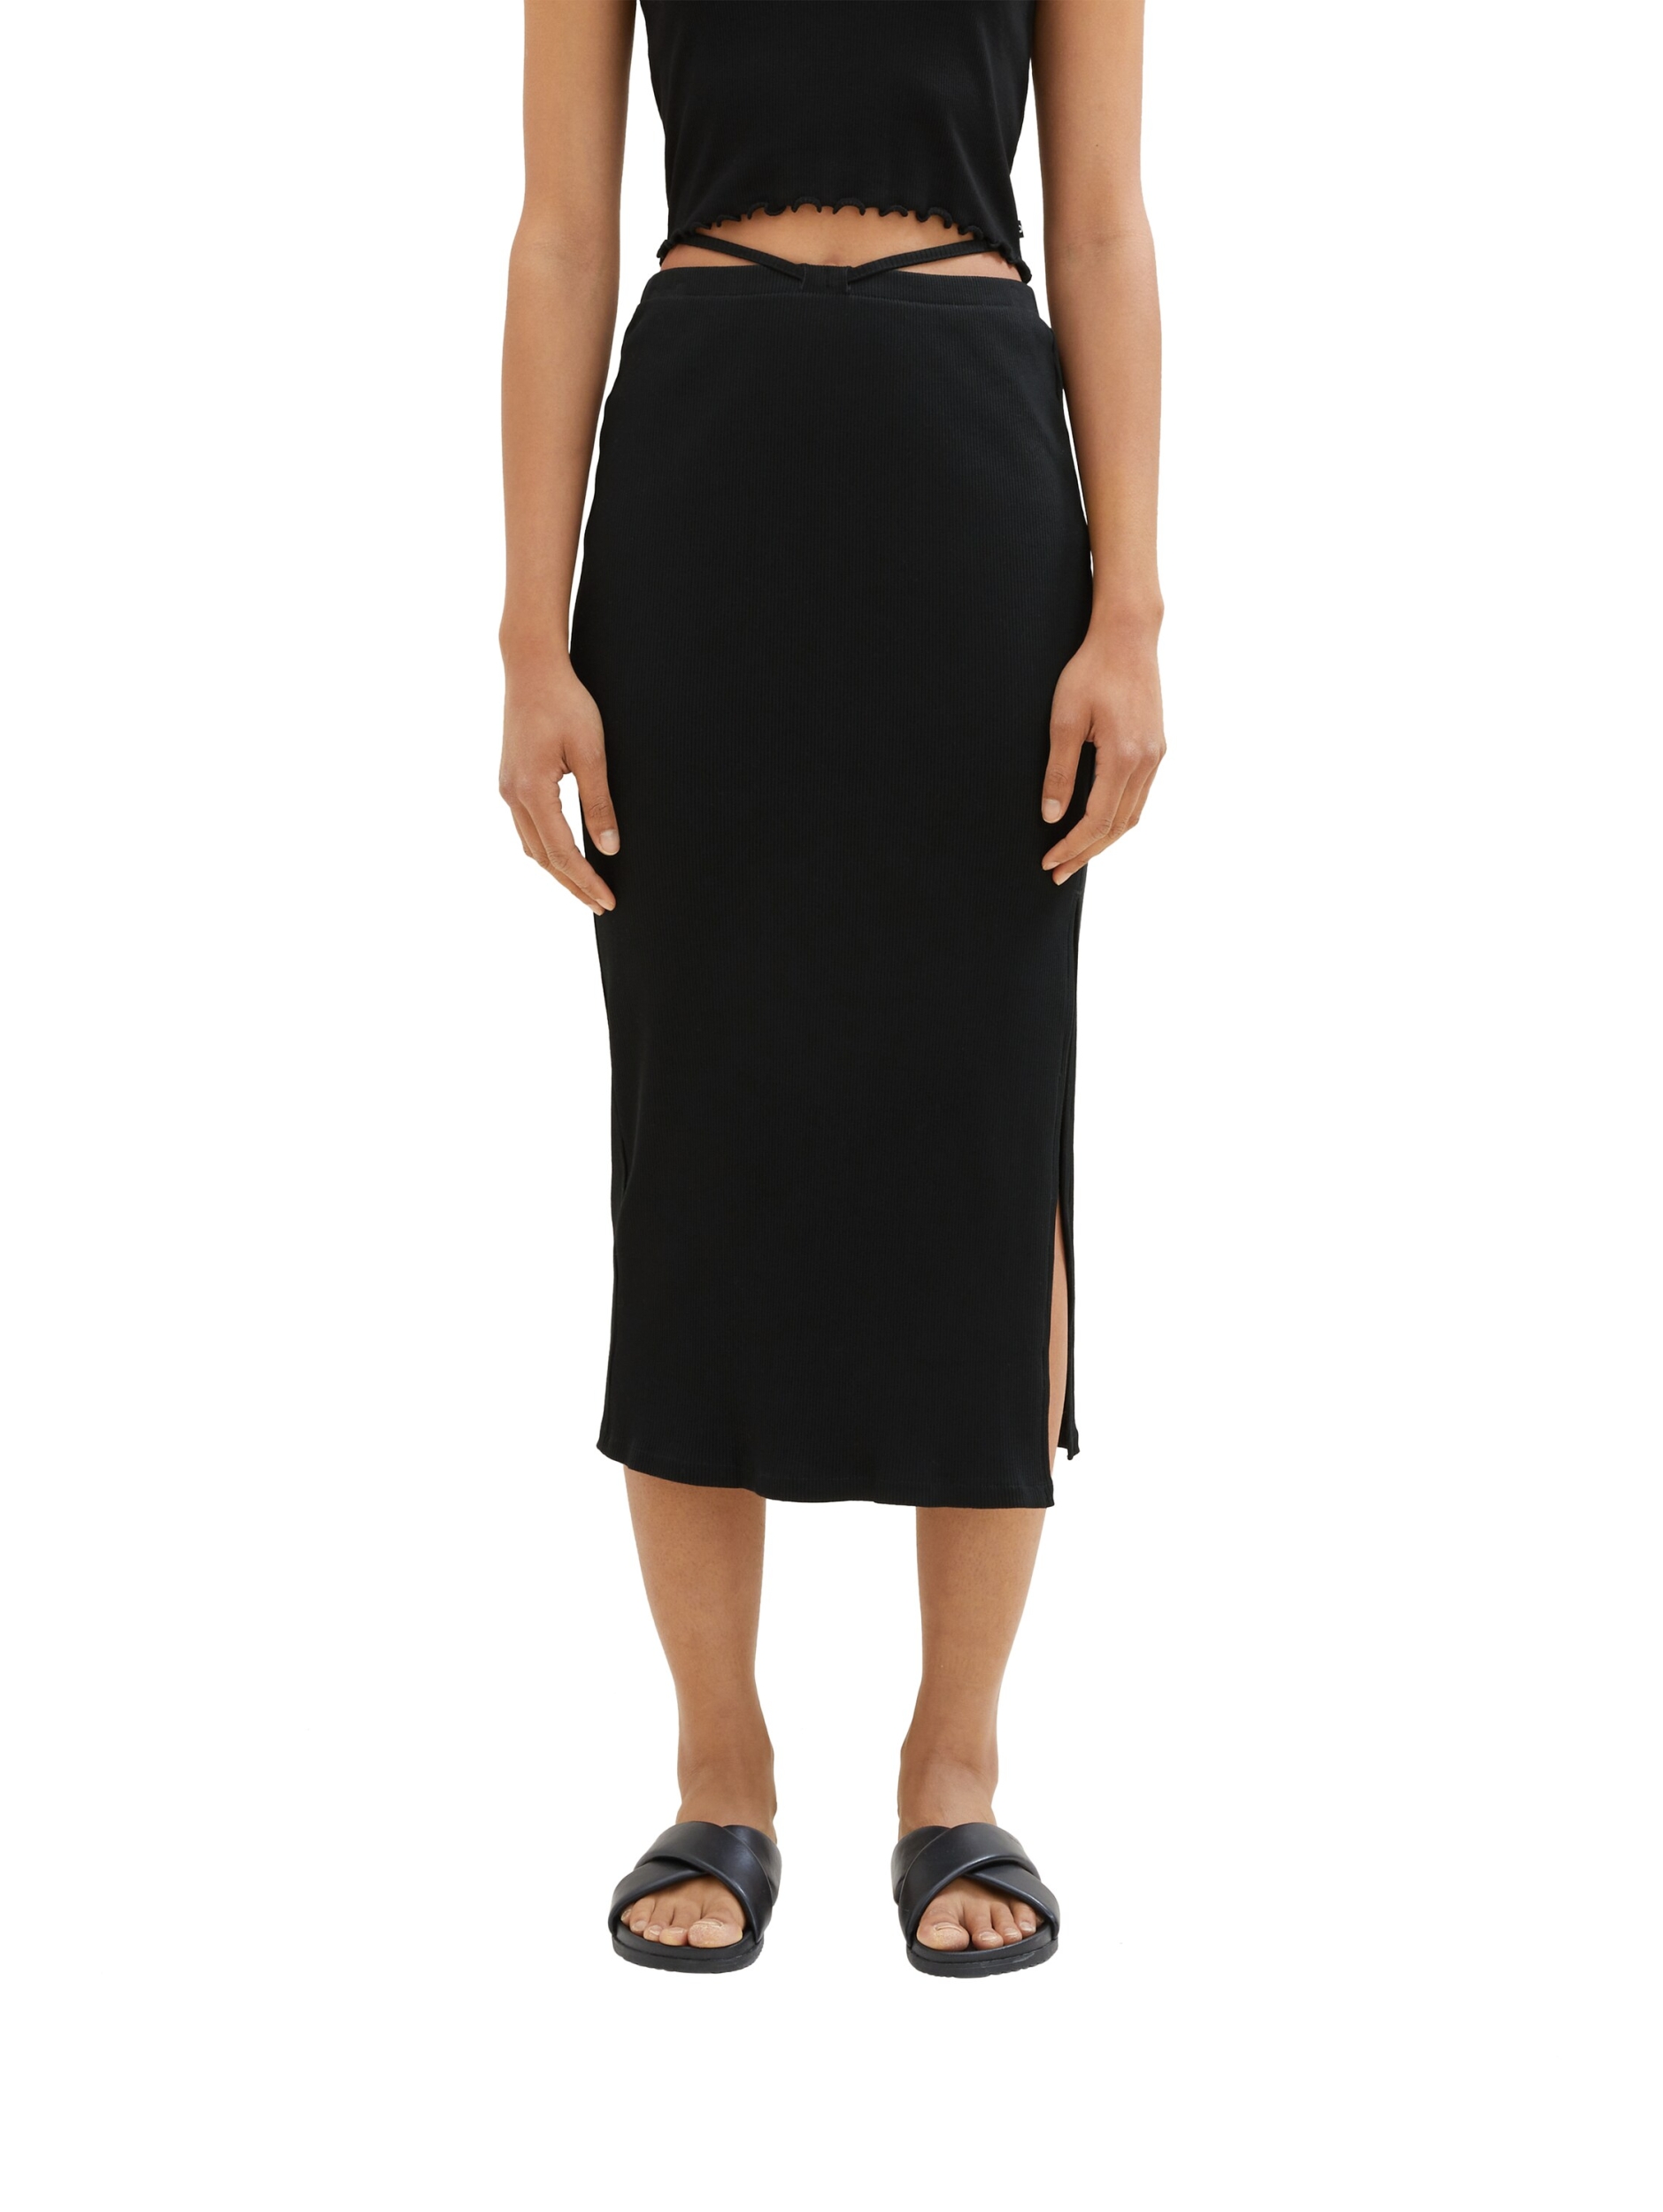 Rock rib midi skirt with straps